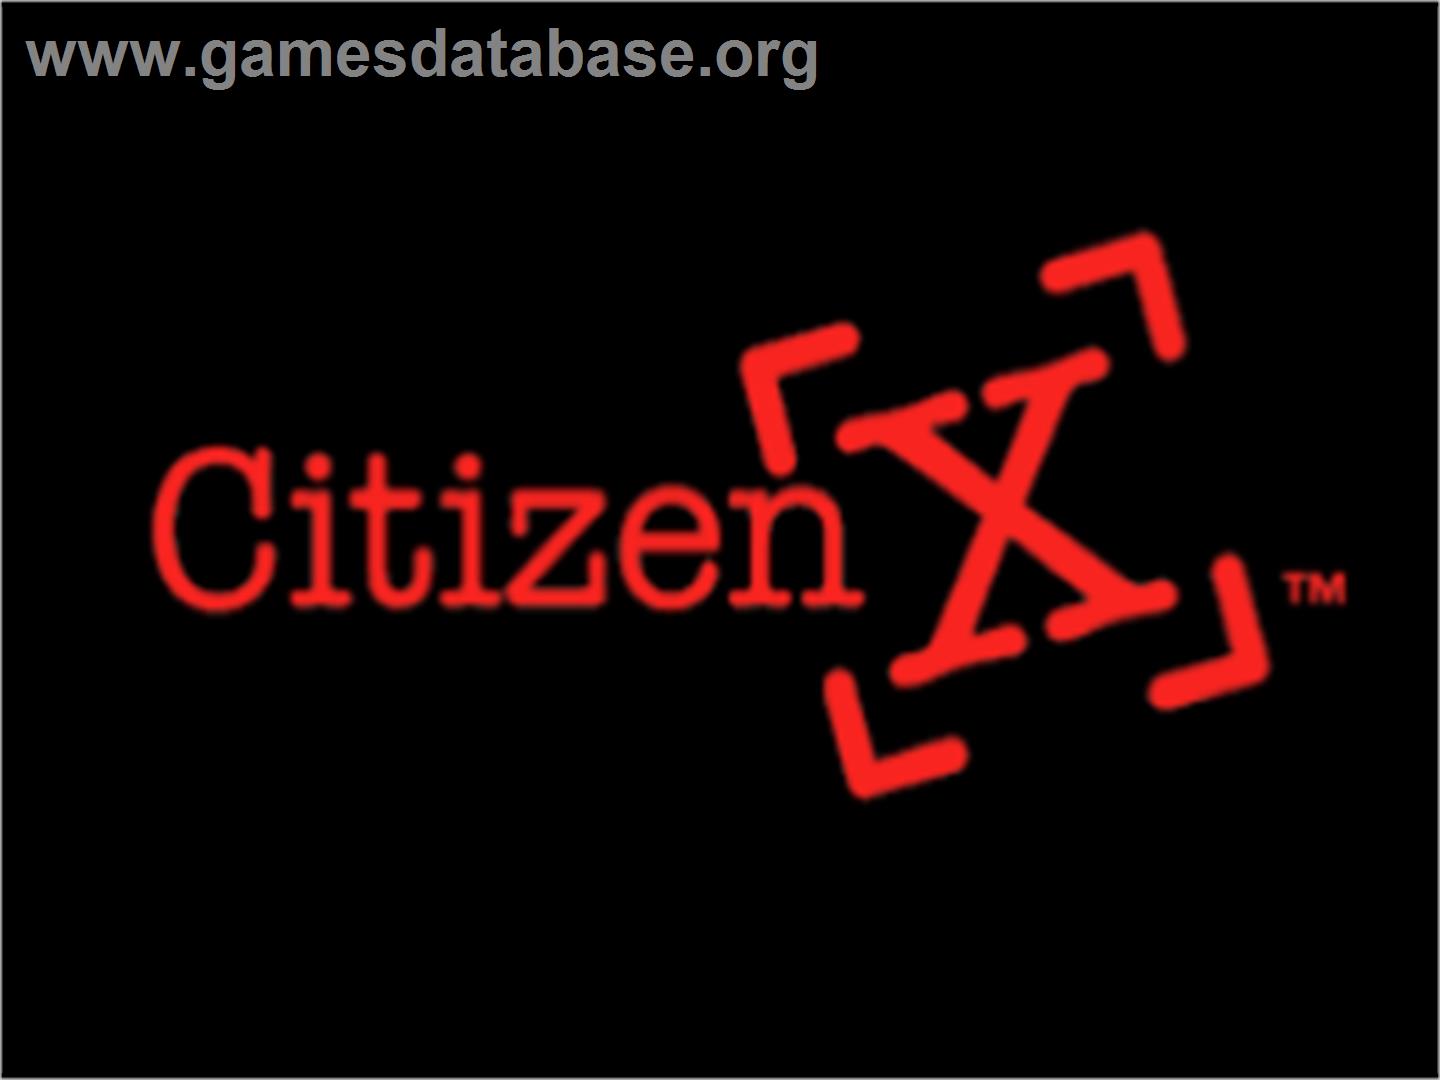 Citizen X - Sega CD - Artwork - Title Screen